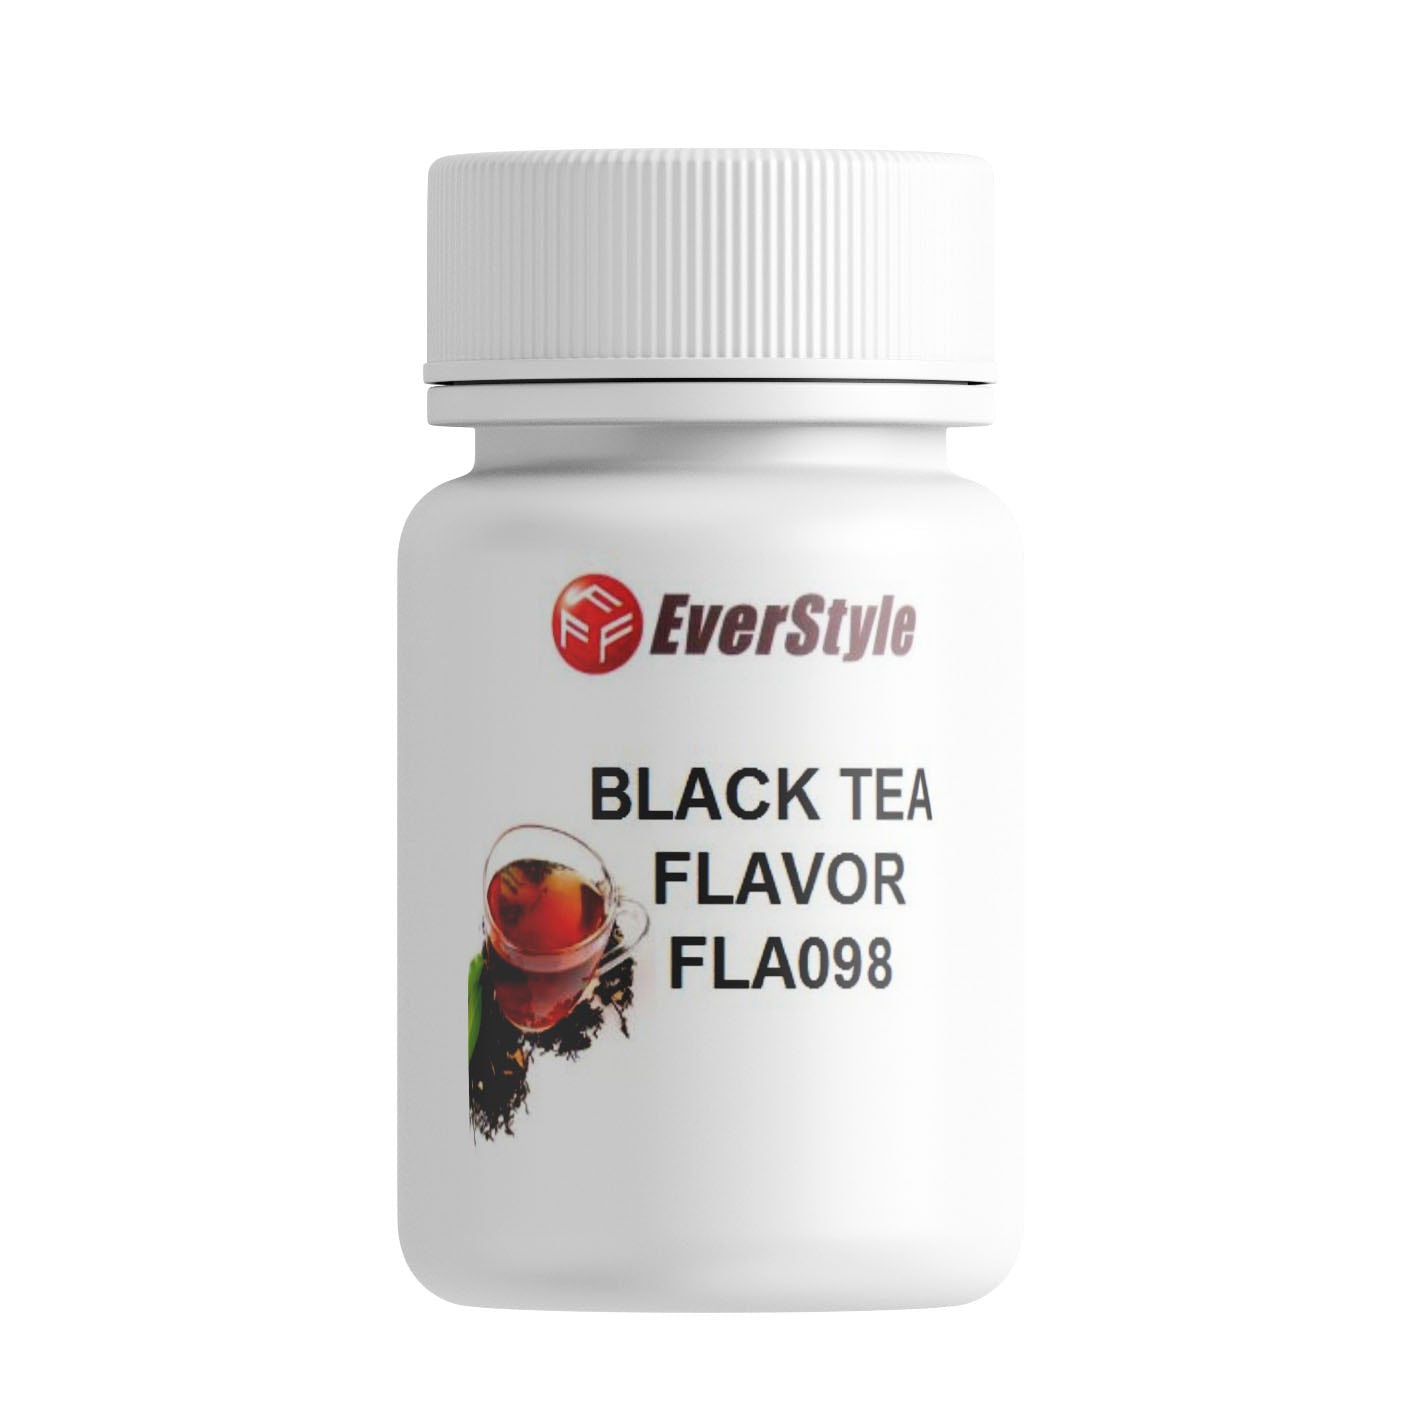 Everstyle Black Tea Flavor 30g (FLA098)